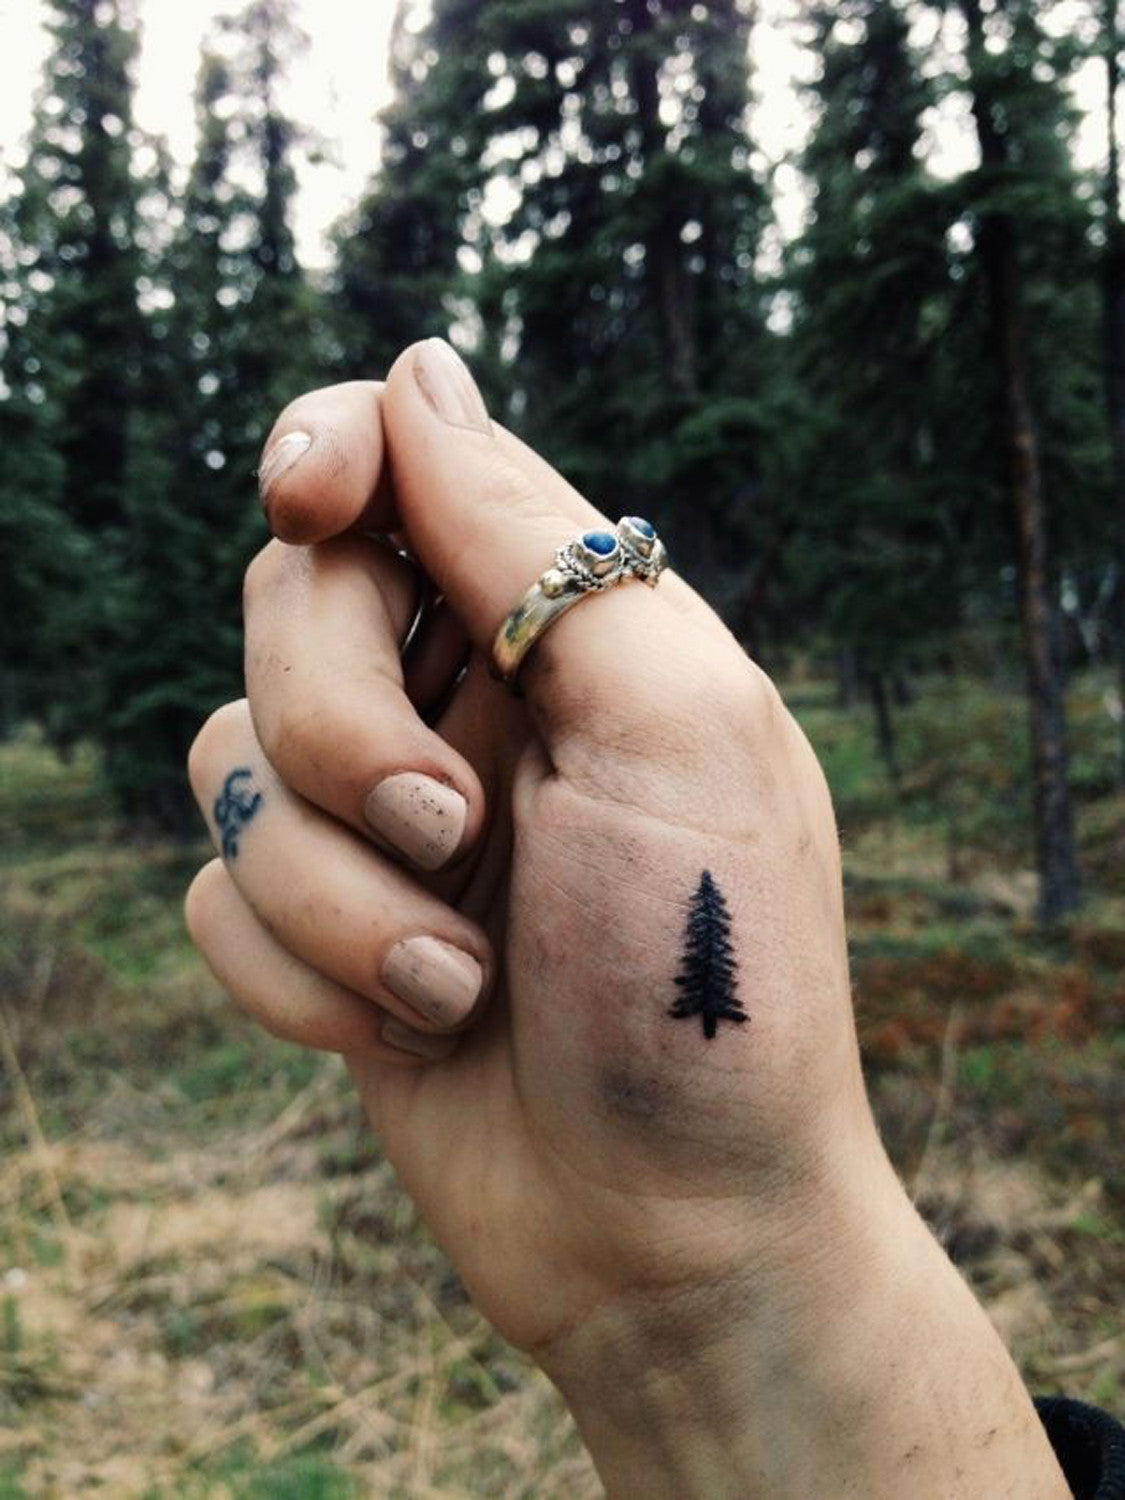 Hand Tattoos Ideas for Women - Pine Evergreen Tree Tats - MyBodiArt.com